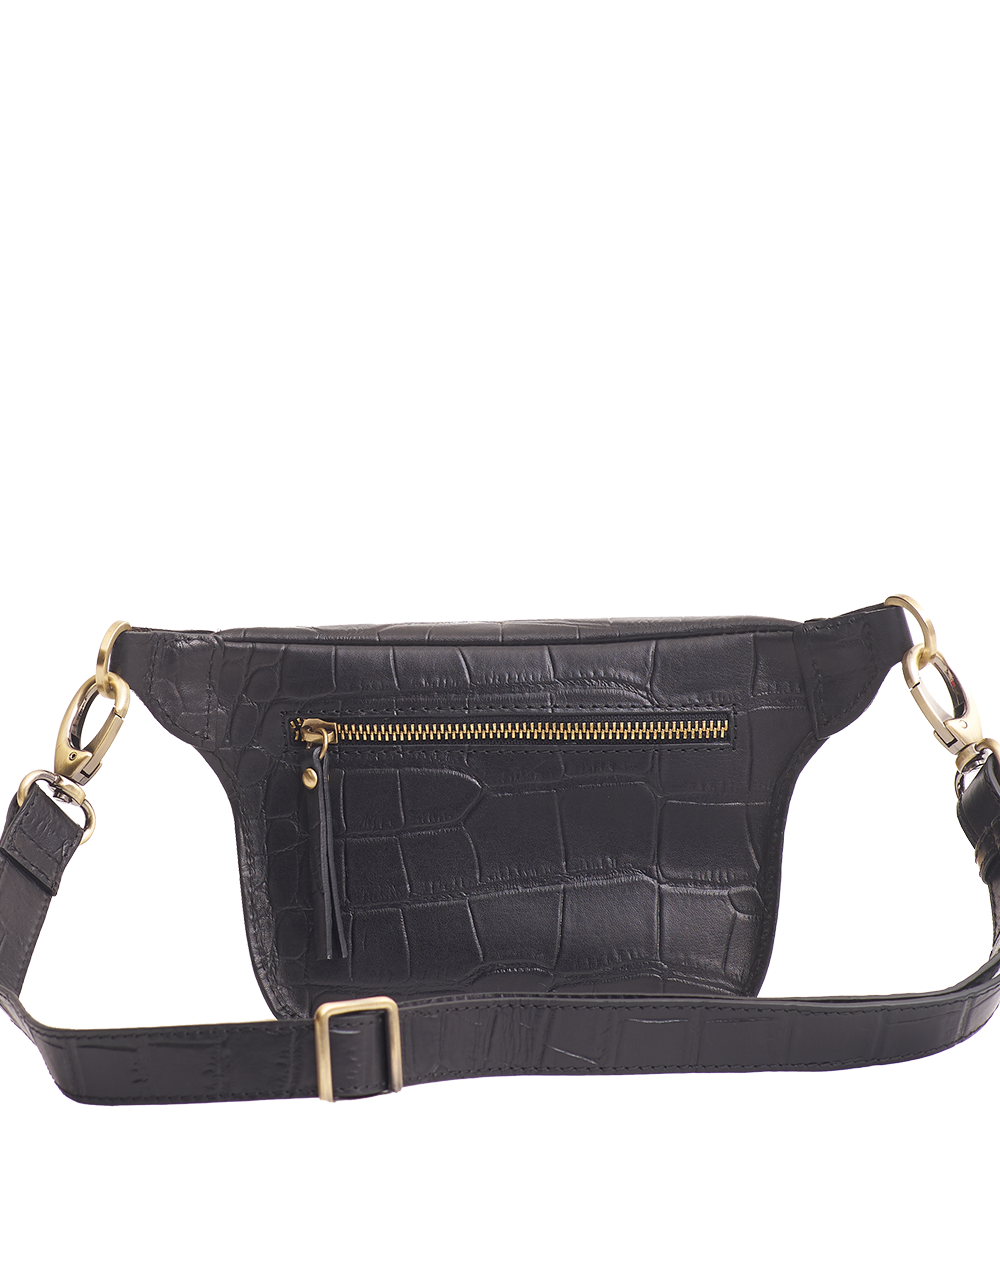 Beck's Bum Bag Black Full Croco - Croco Leather Strap